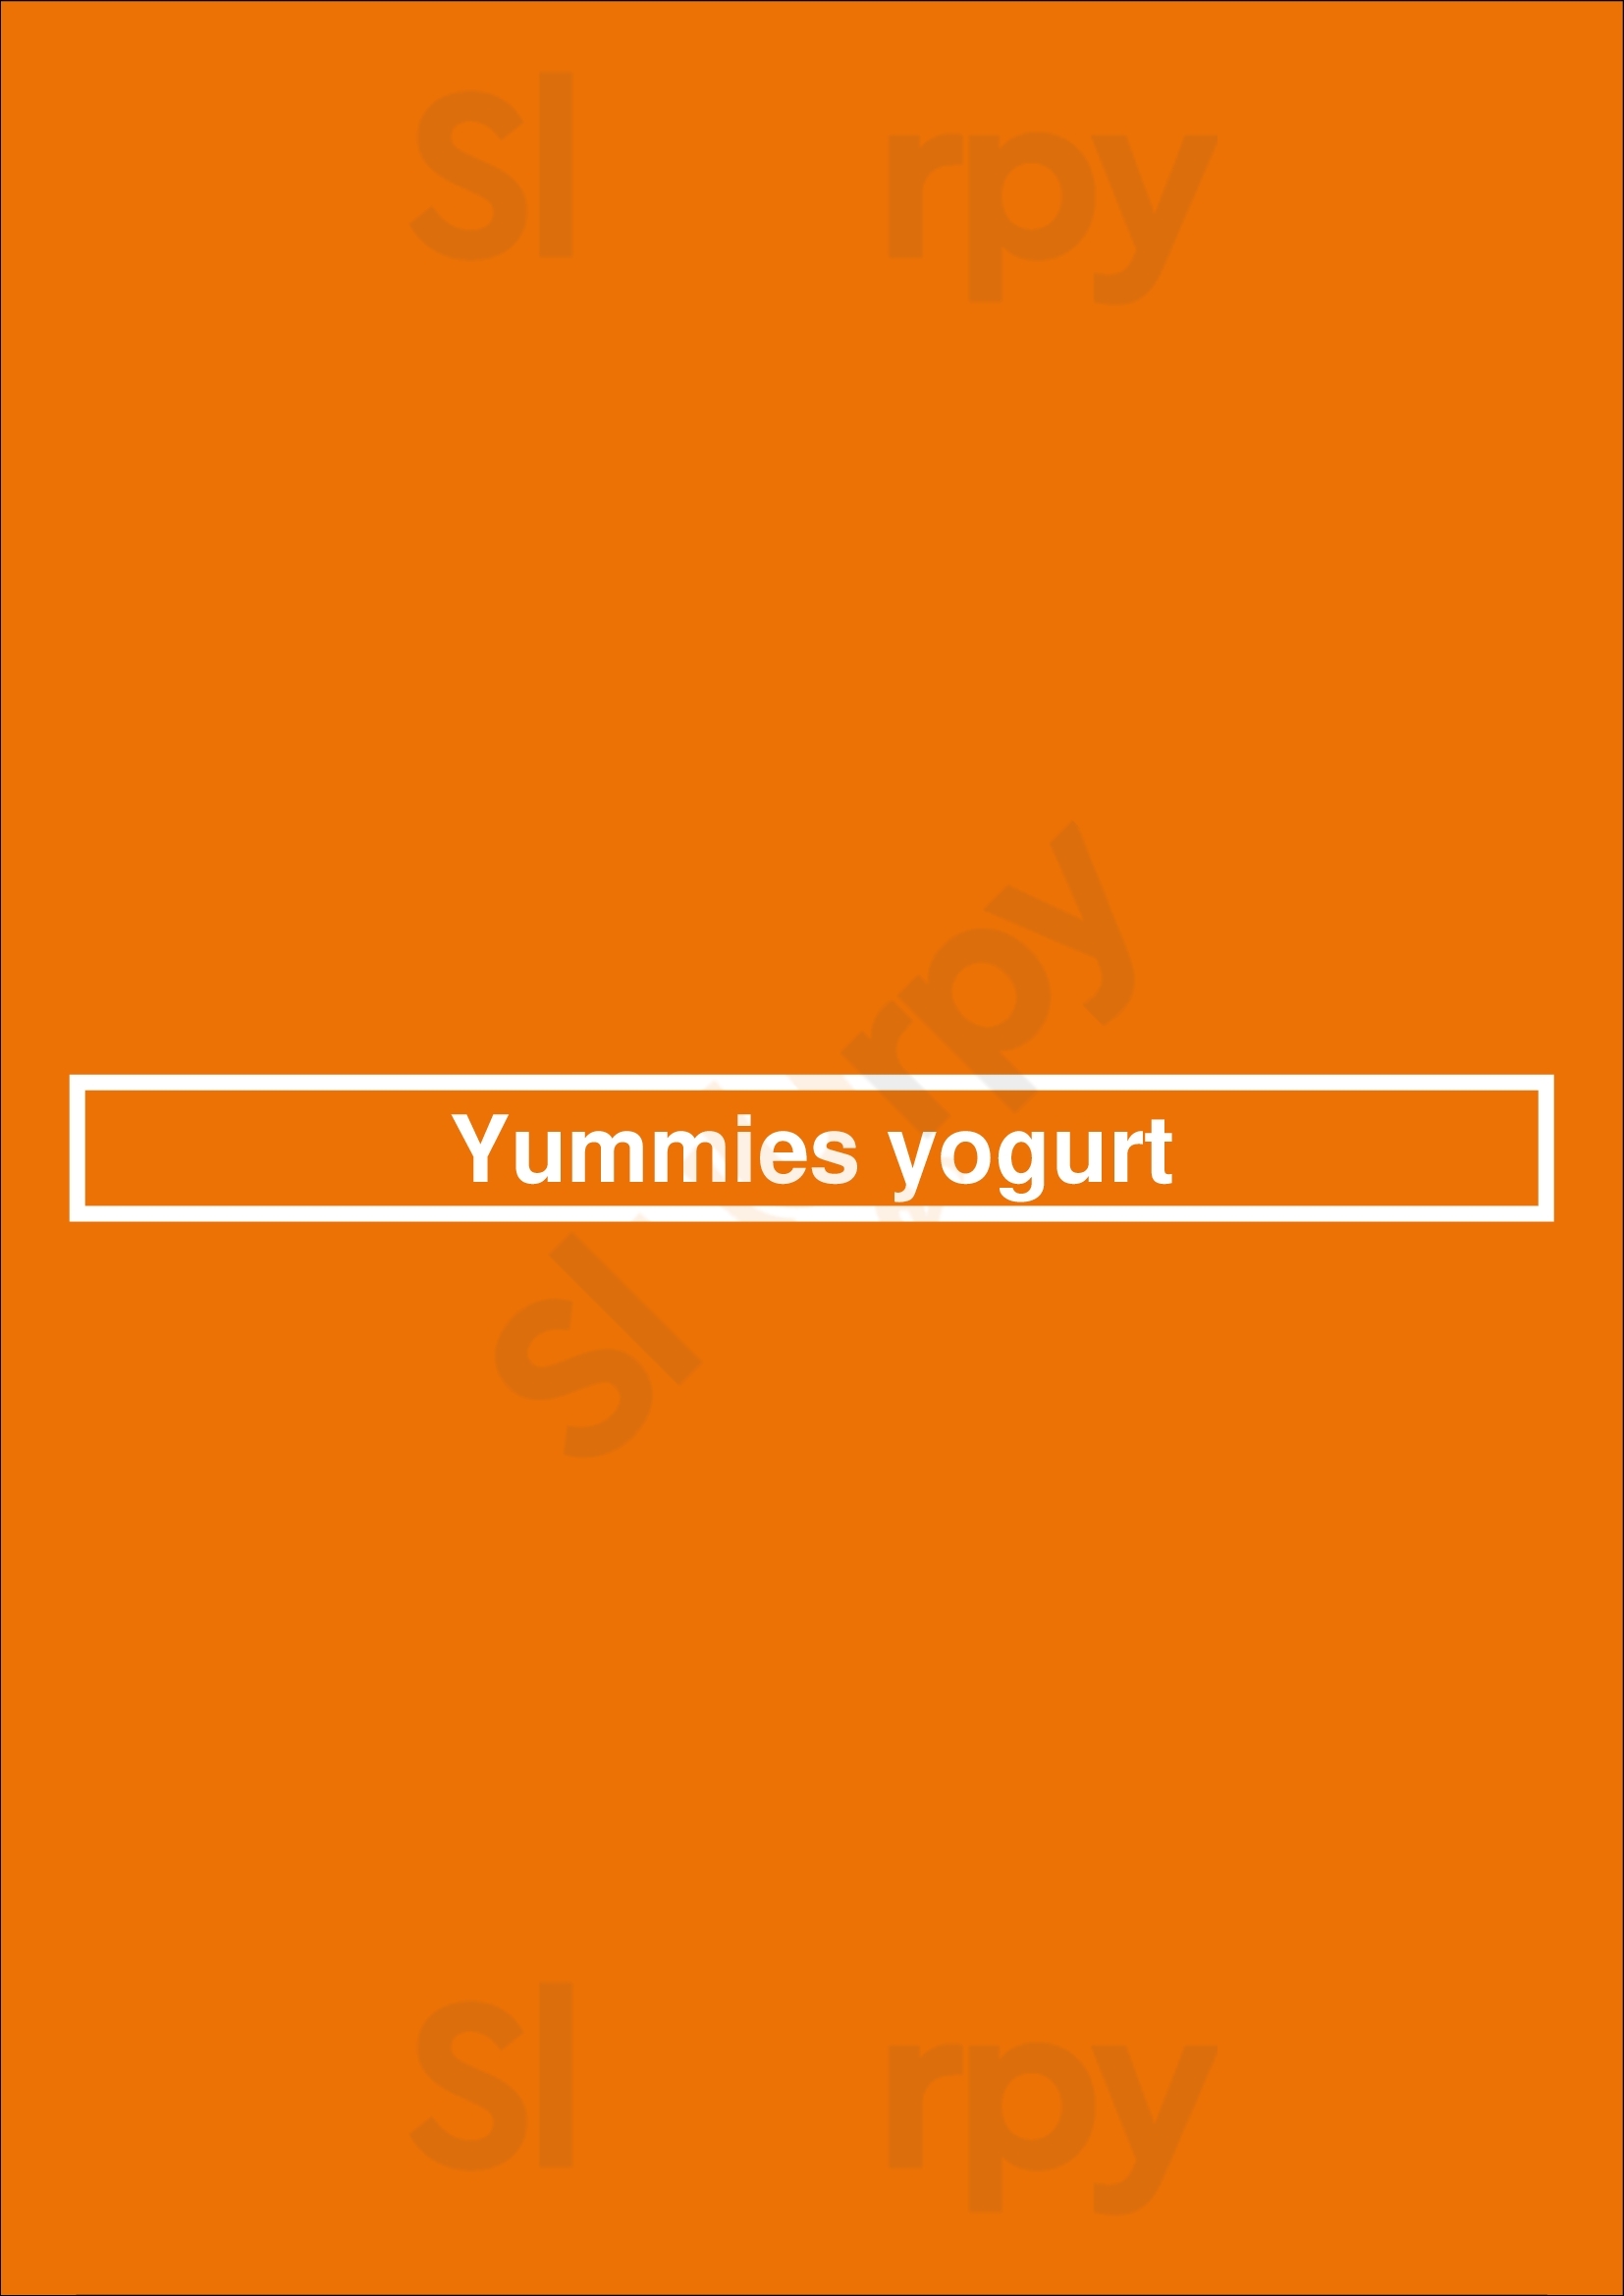 Yummies Yogurt Phoenix Menu - 1